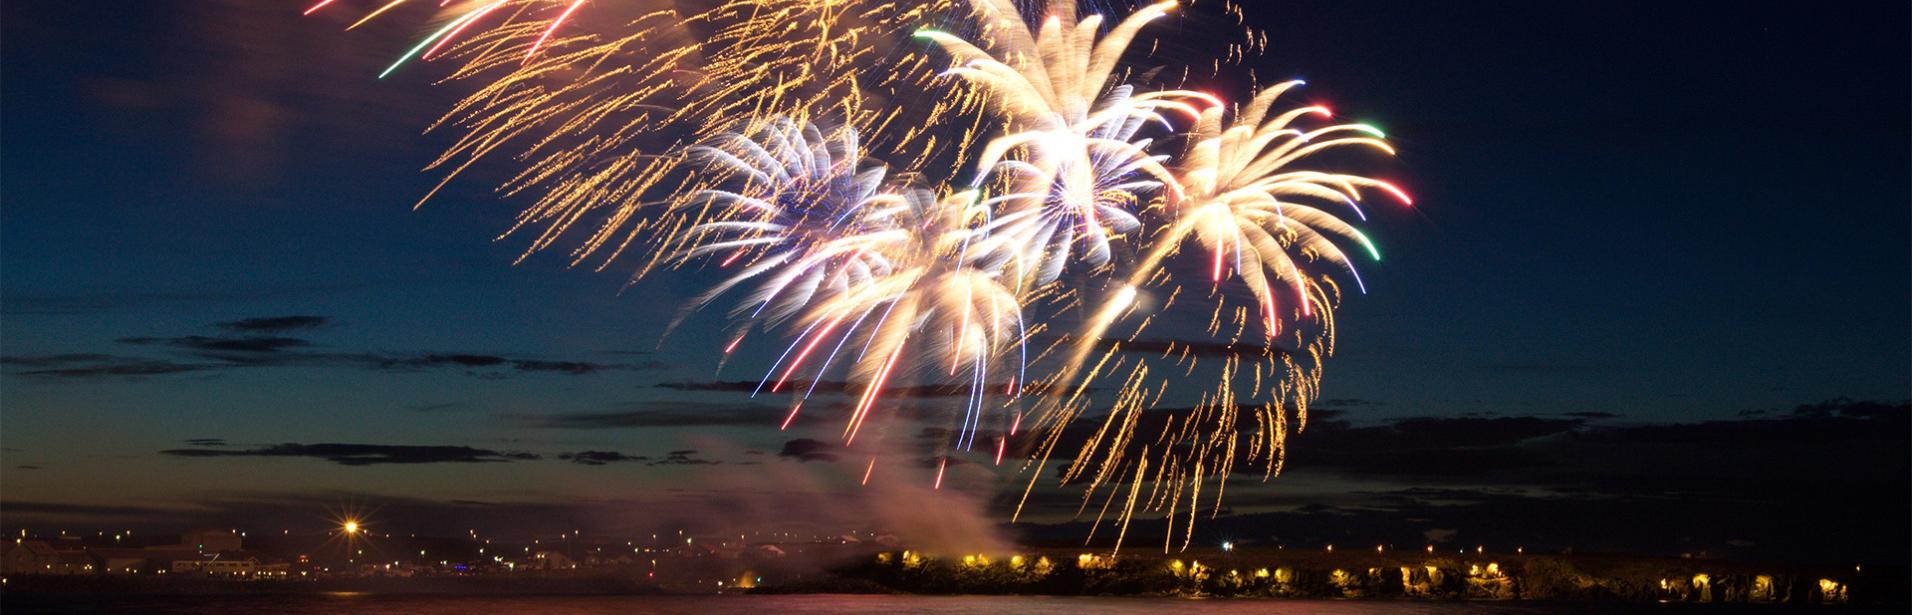 reykjanes, fireworks, iceland, new years eve